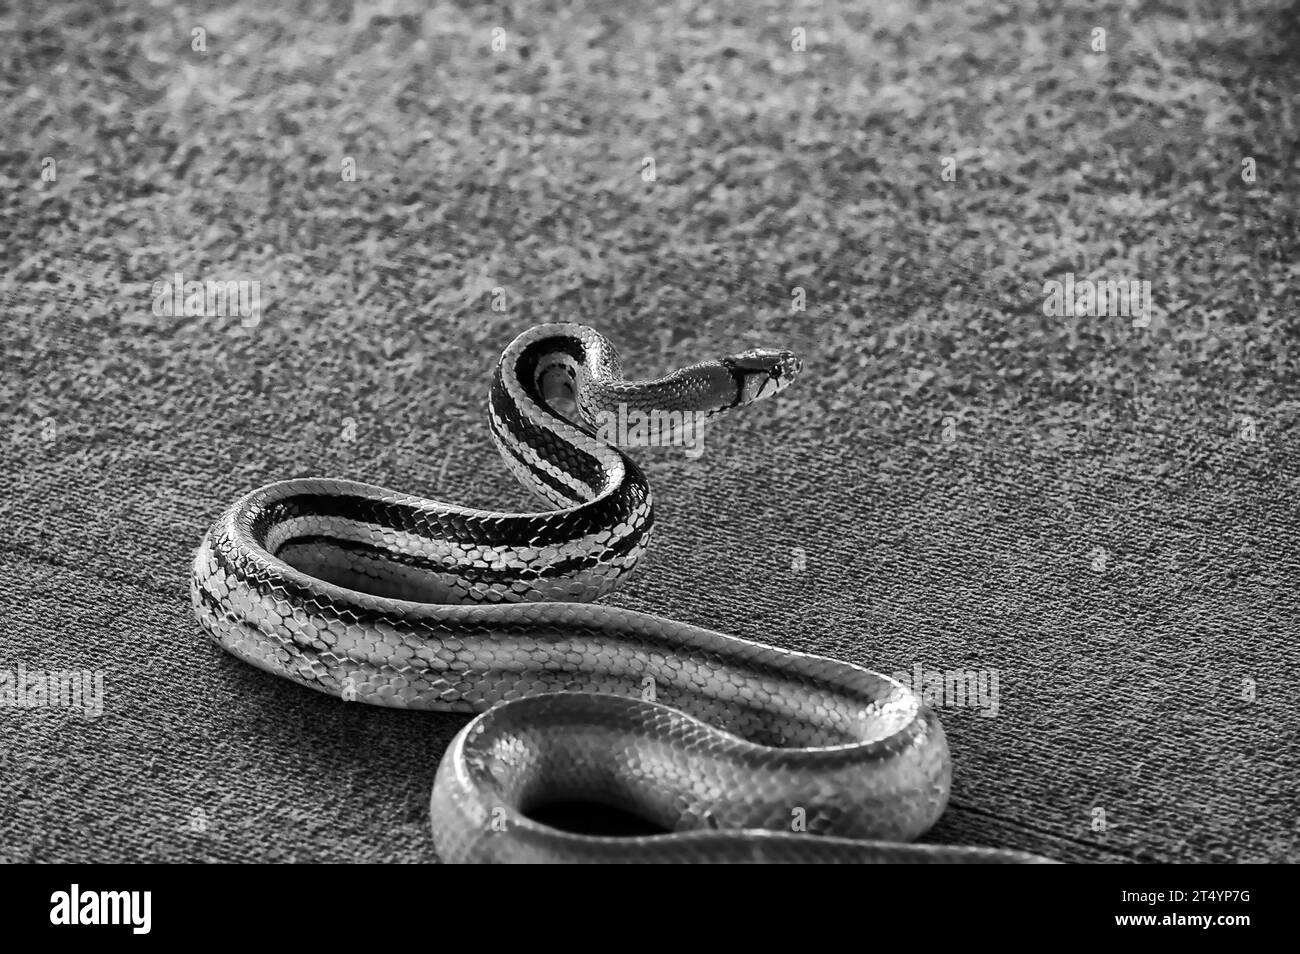 Photo snakes Stock Photo